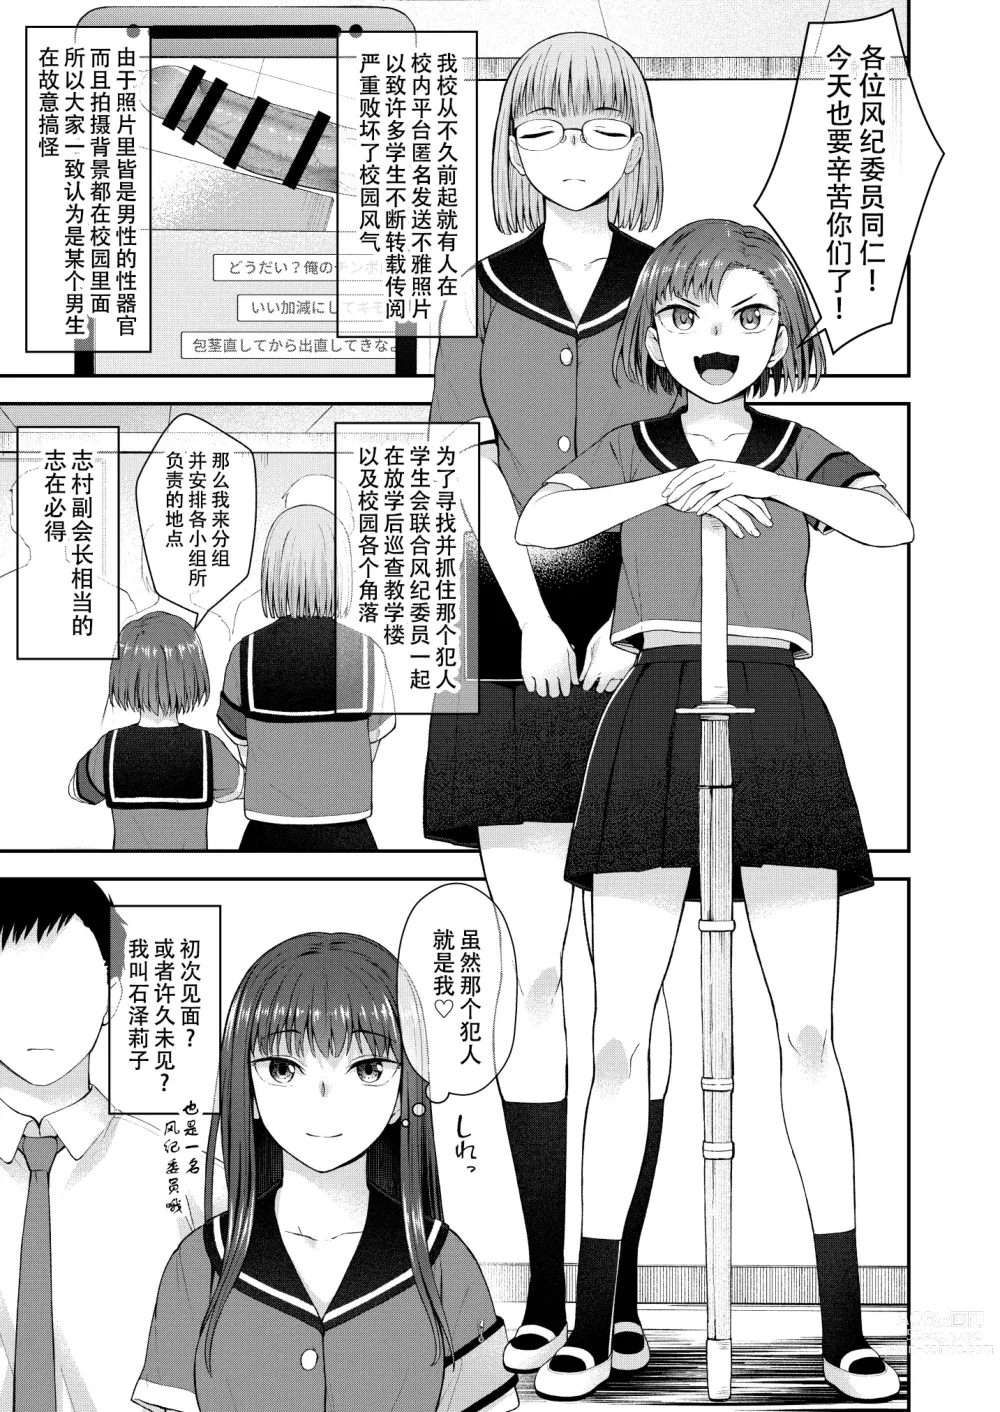 Page 3 of doujinshi 放课后的自拍少女2 那个露出男性性器并且自拍的变态只有她知道其真面目.